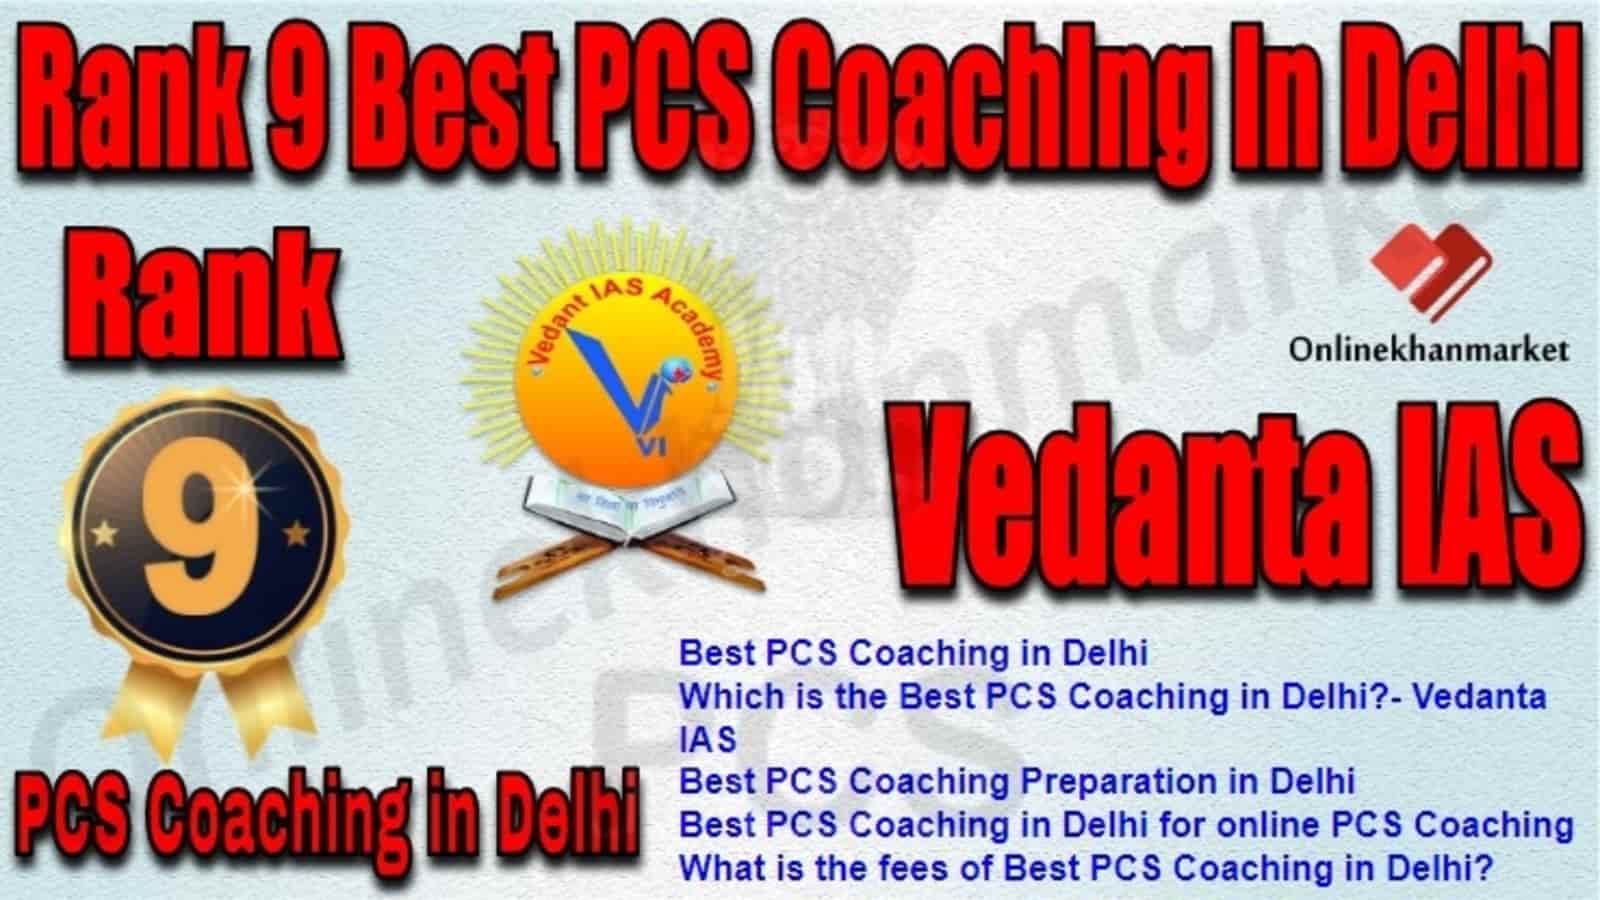 Rank 9 Best PCS Coaching in Delhi